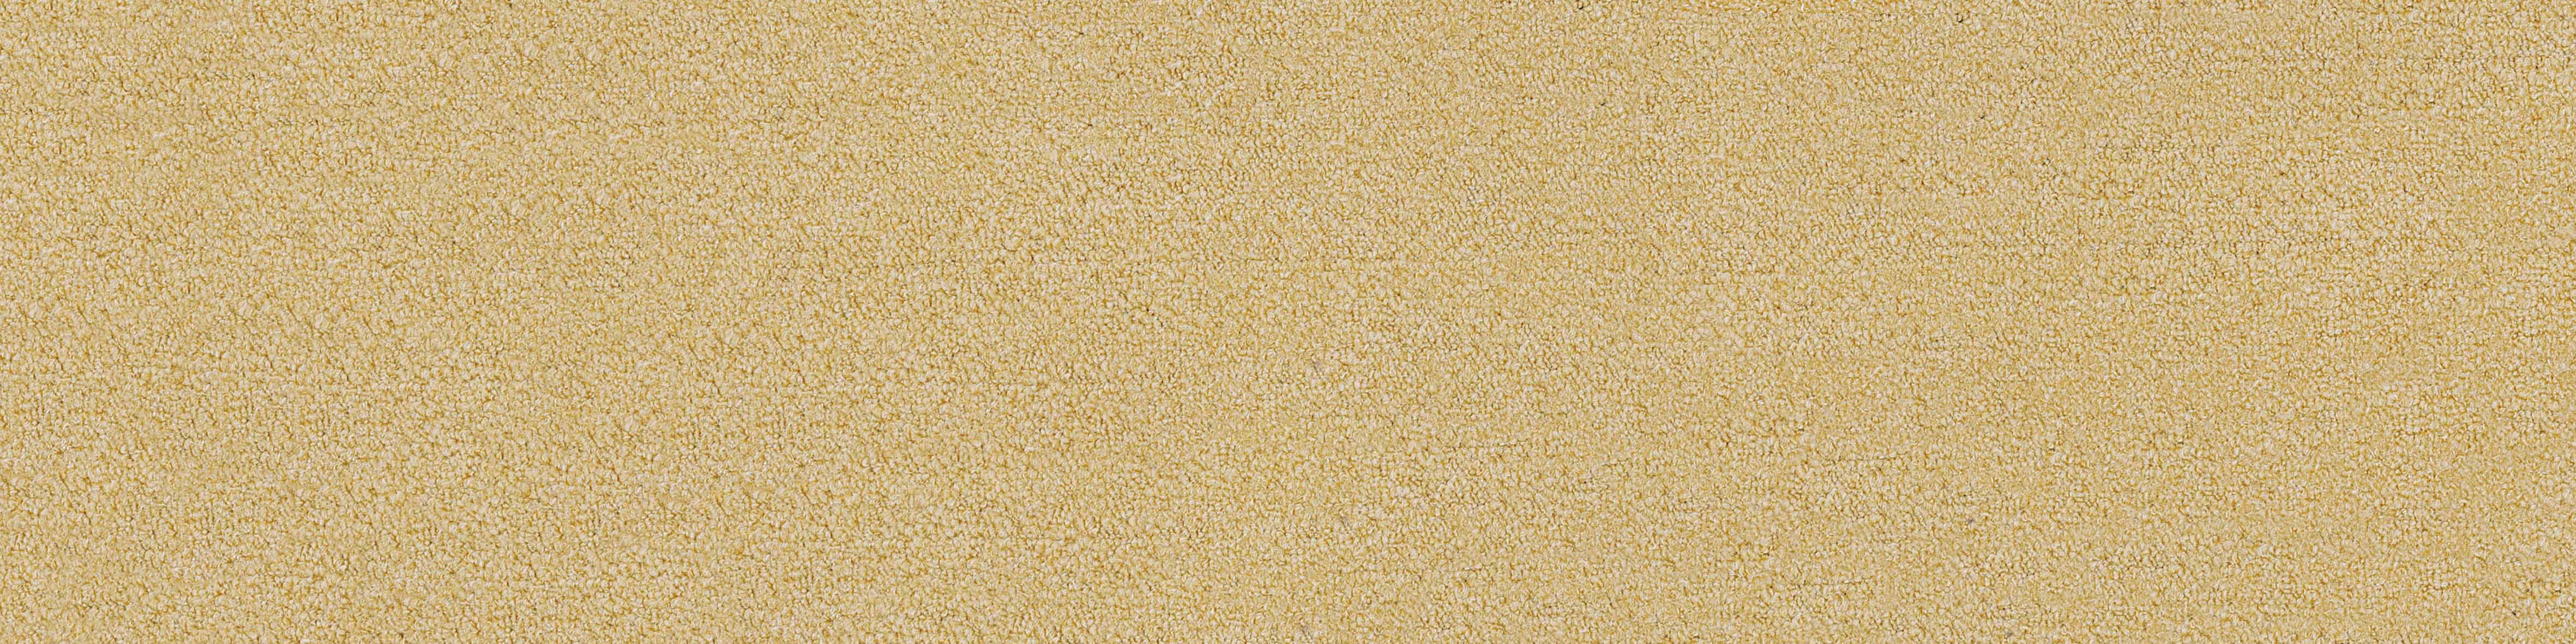 Nylon66 Carpet Tile